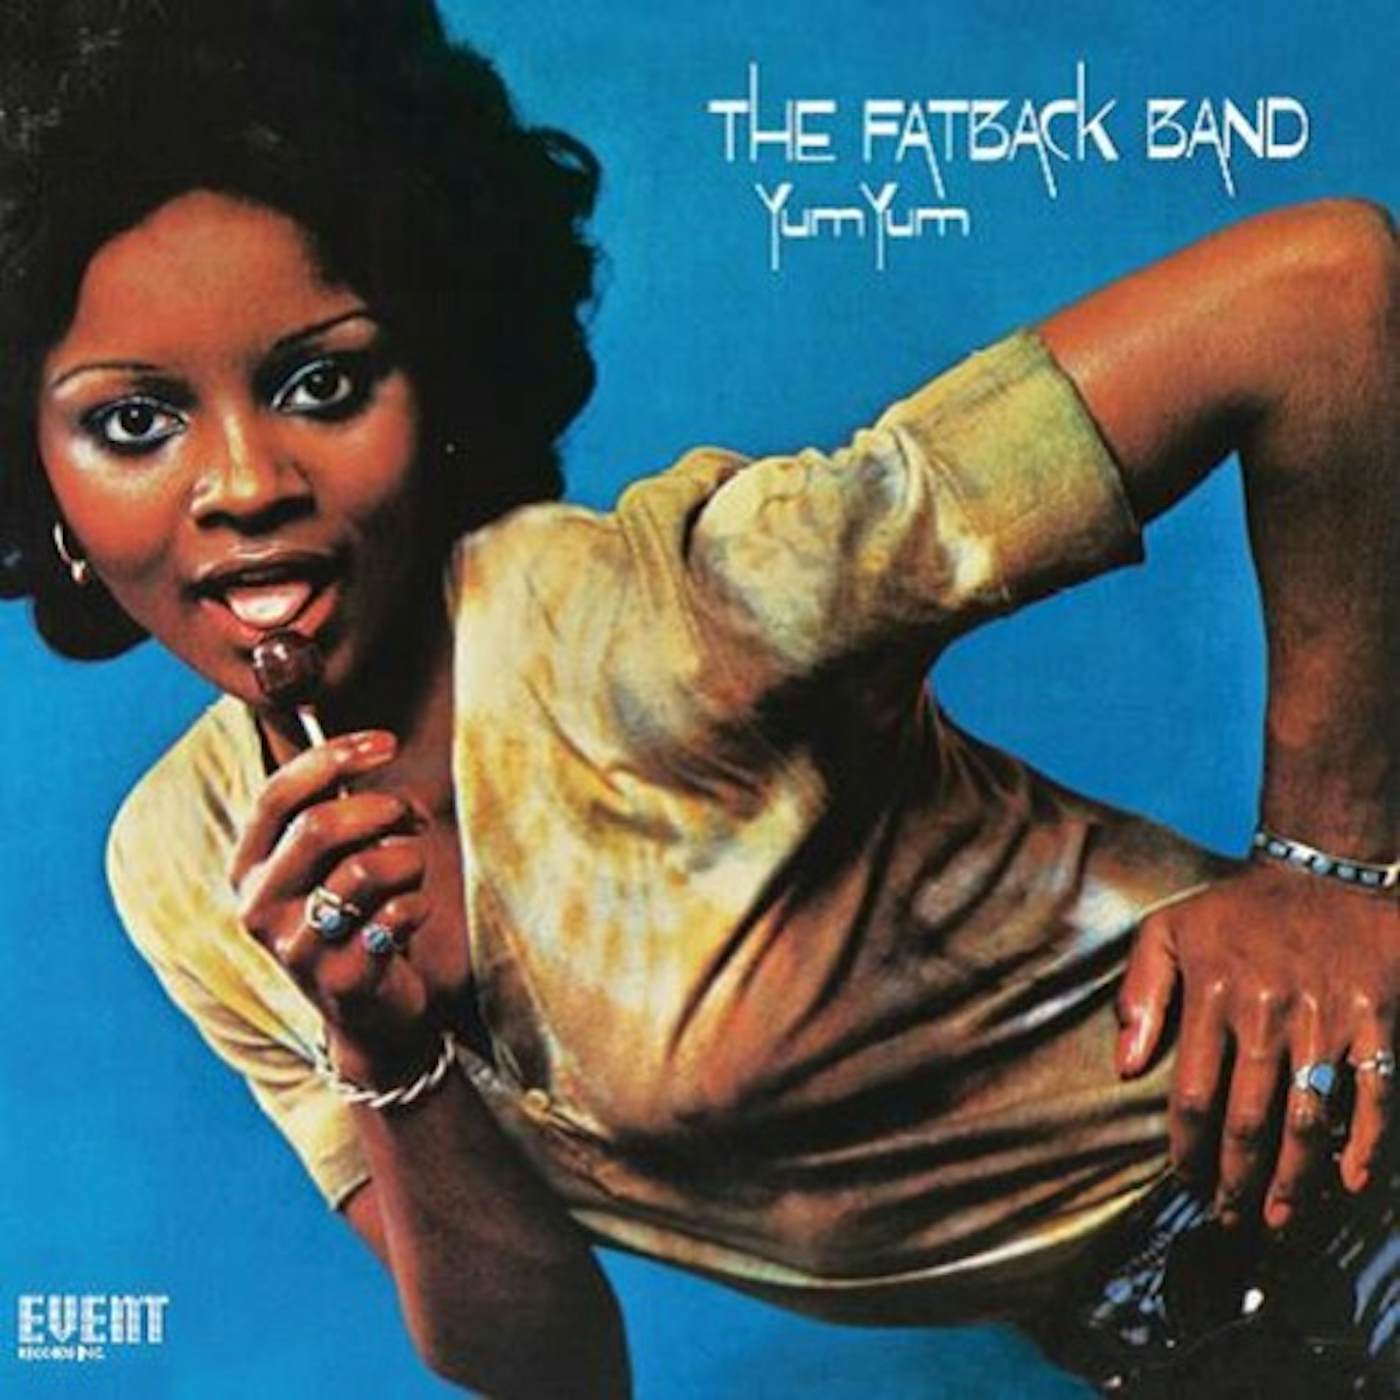 Fatback Band Yum Yum vinyl record